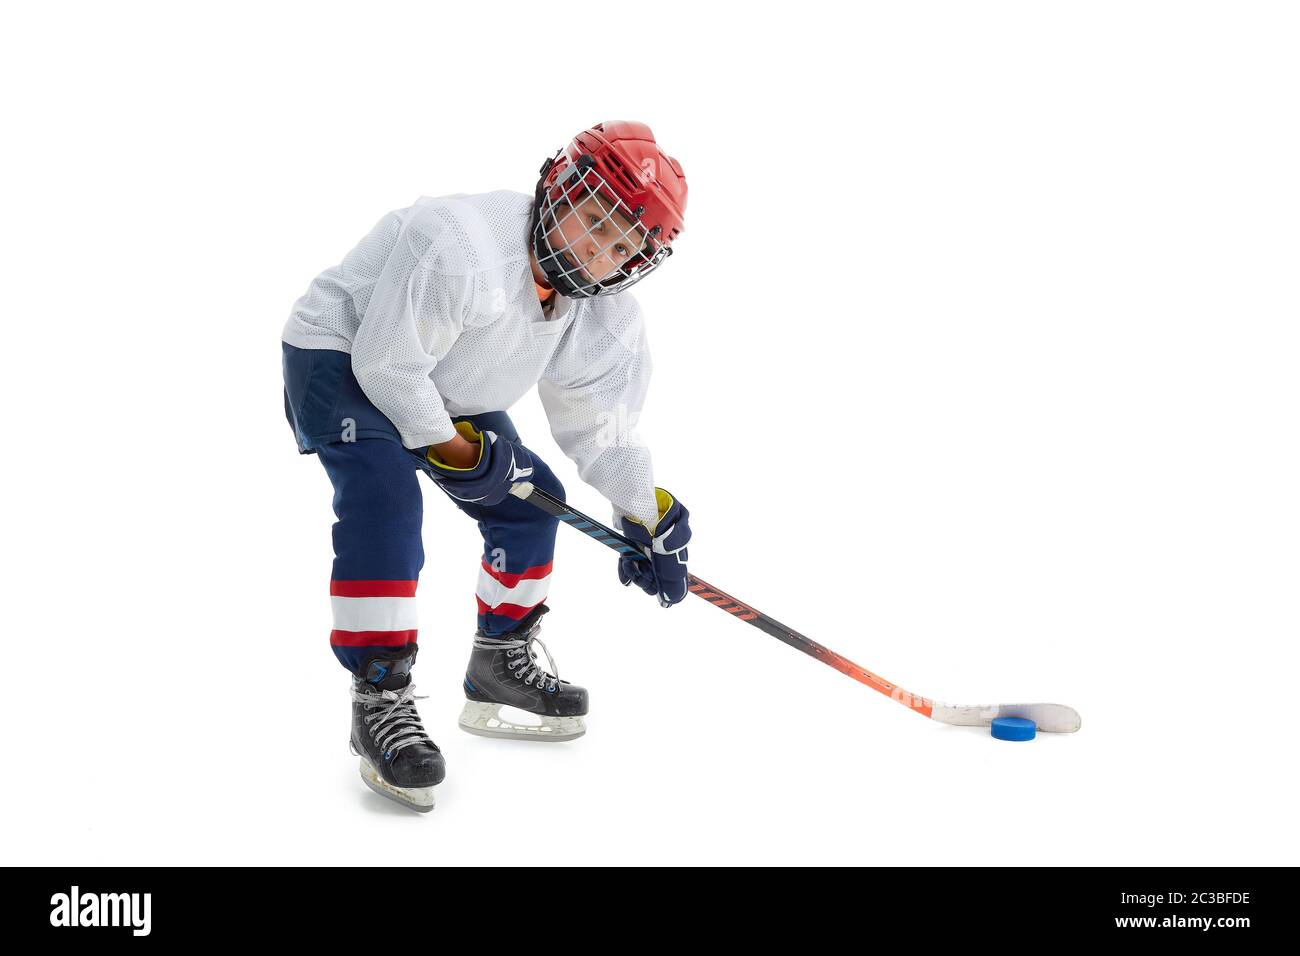 Junior ice hockey player . Child (boy) is hockey player in uniform